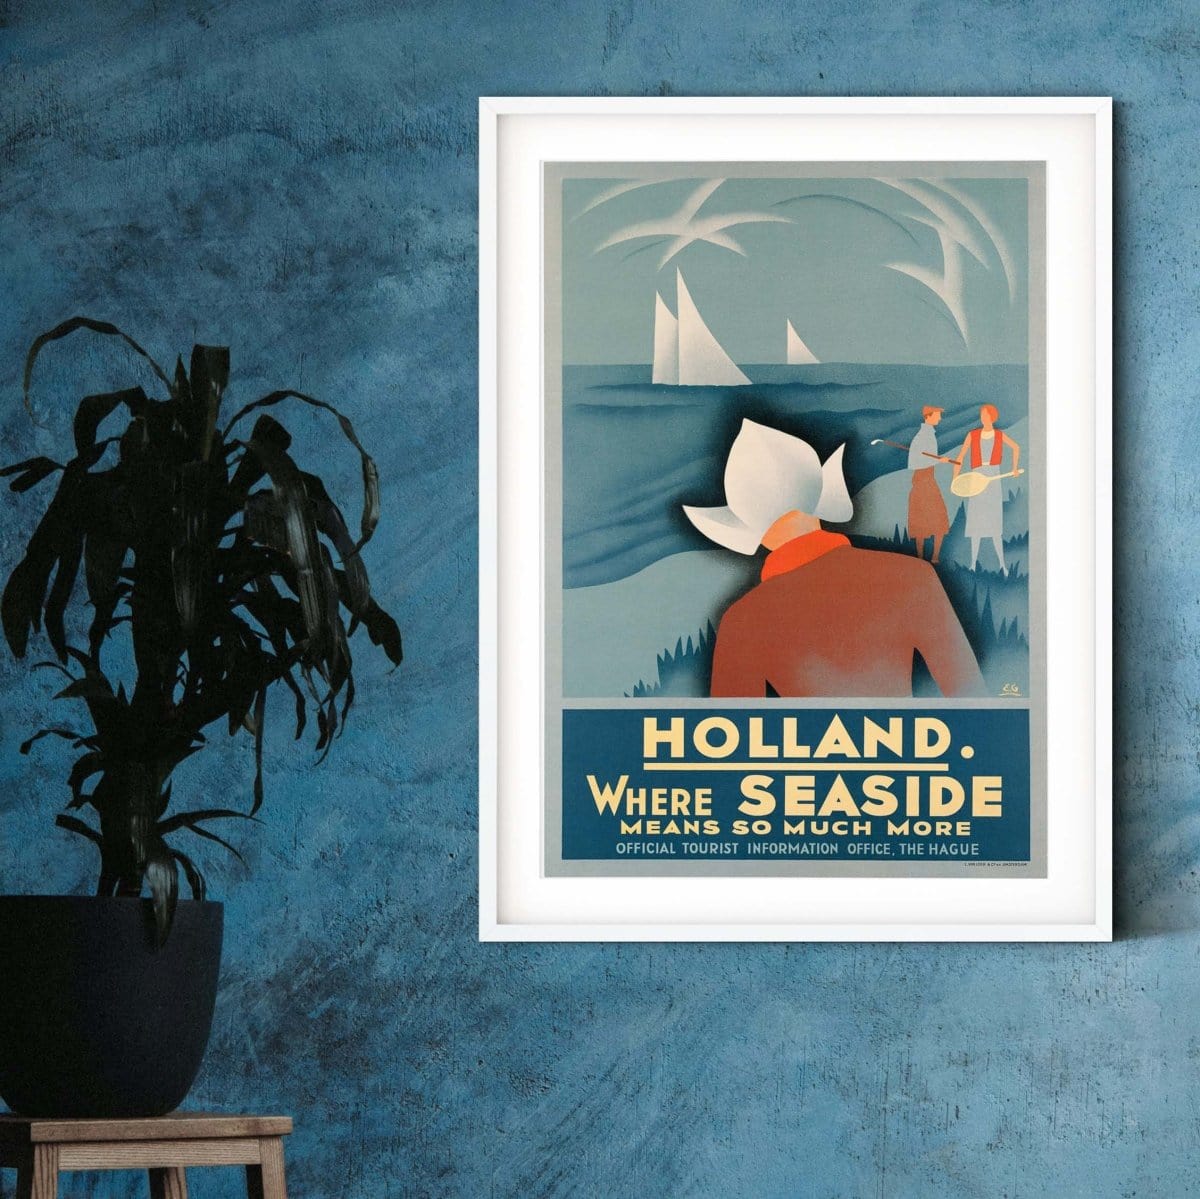 Holland vintage travel poster, retro travel print